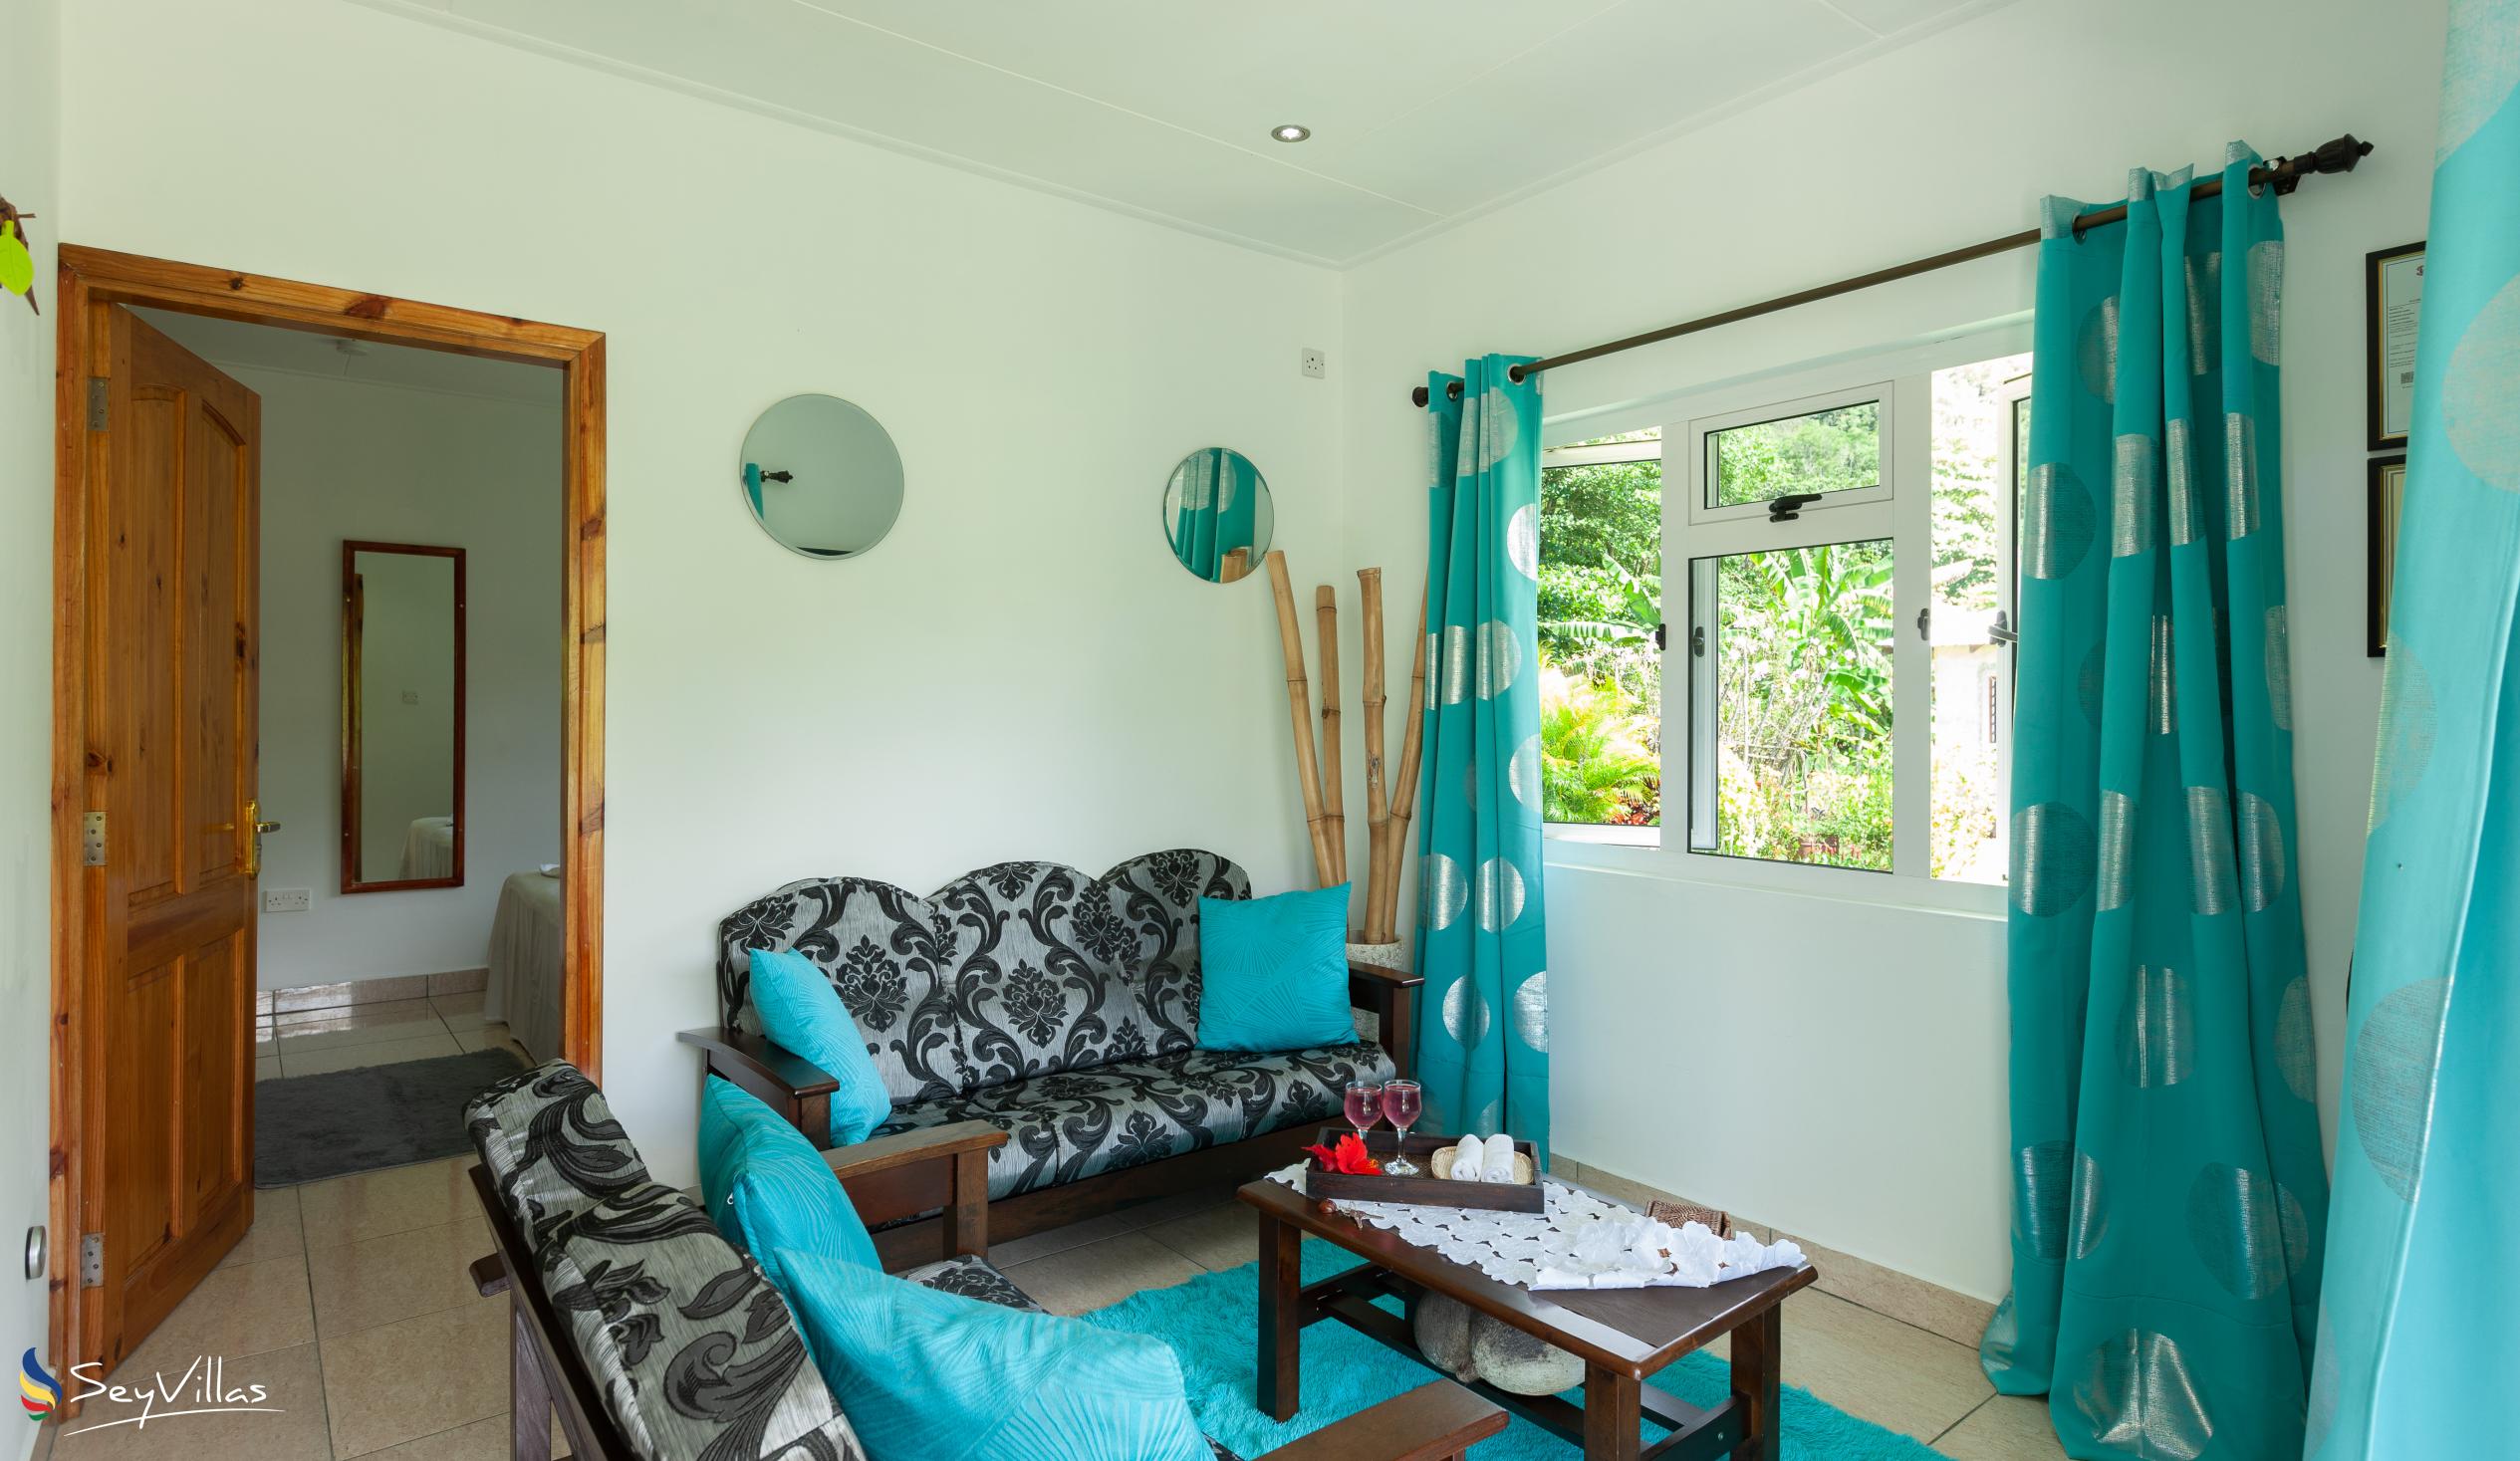 Foto 18: Destination Self-Catering - Villa con 1 camera - Praslin (Seychelles)